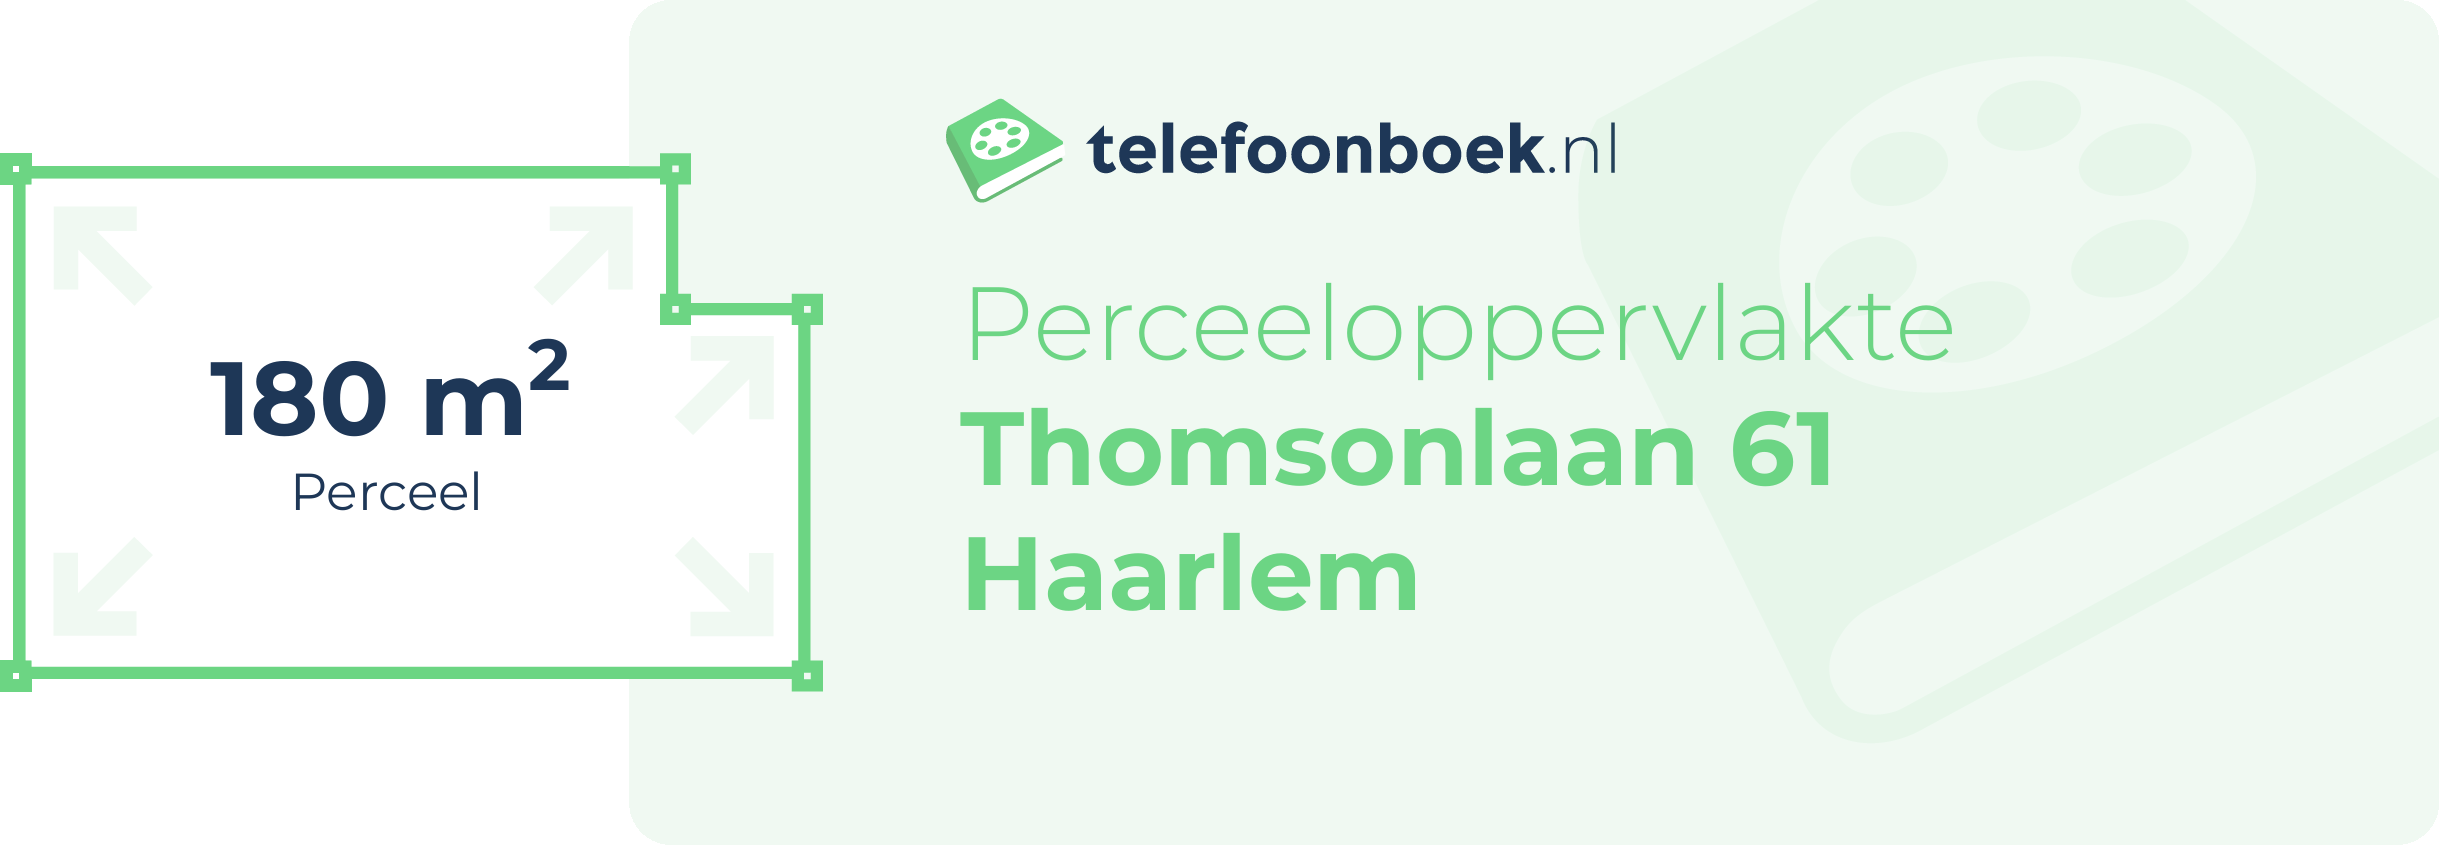 Perceeloppervlakte Thomsonlaan 61 Haarlem